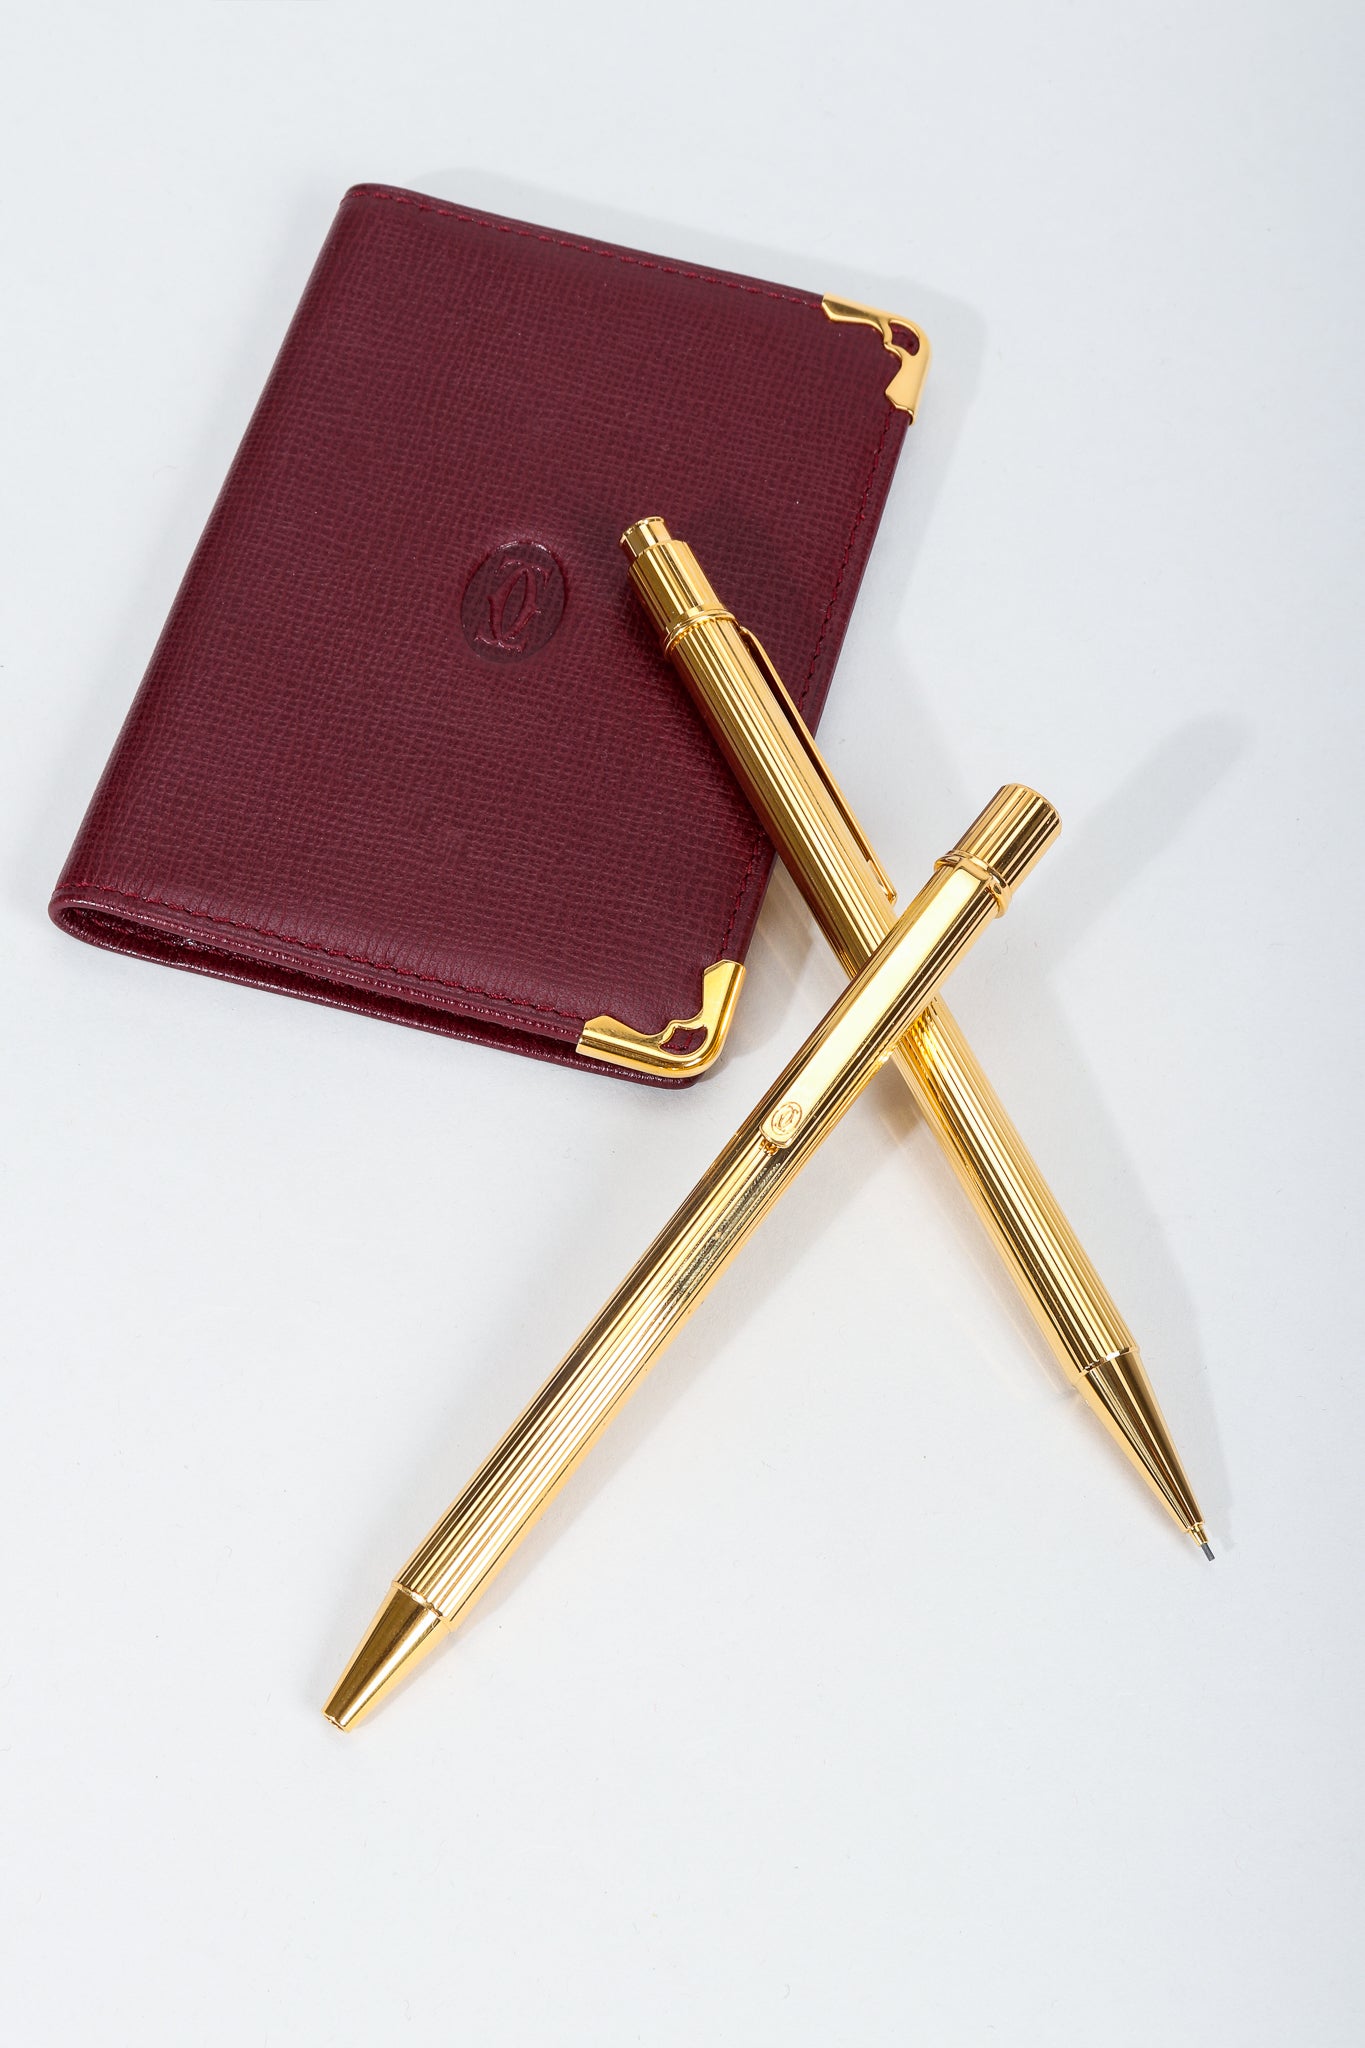 Vintage Must de Cartier Oxblood Leather Wallet & Gold Pen Boxed Gift Set